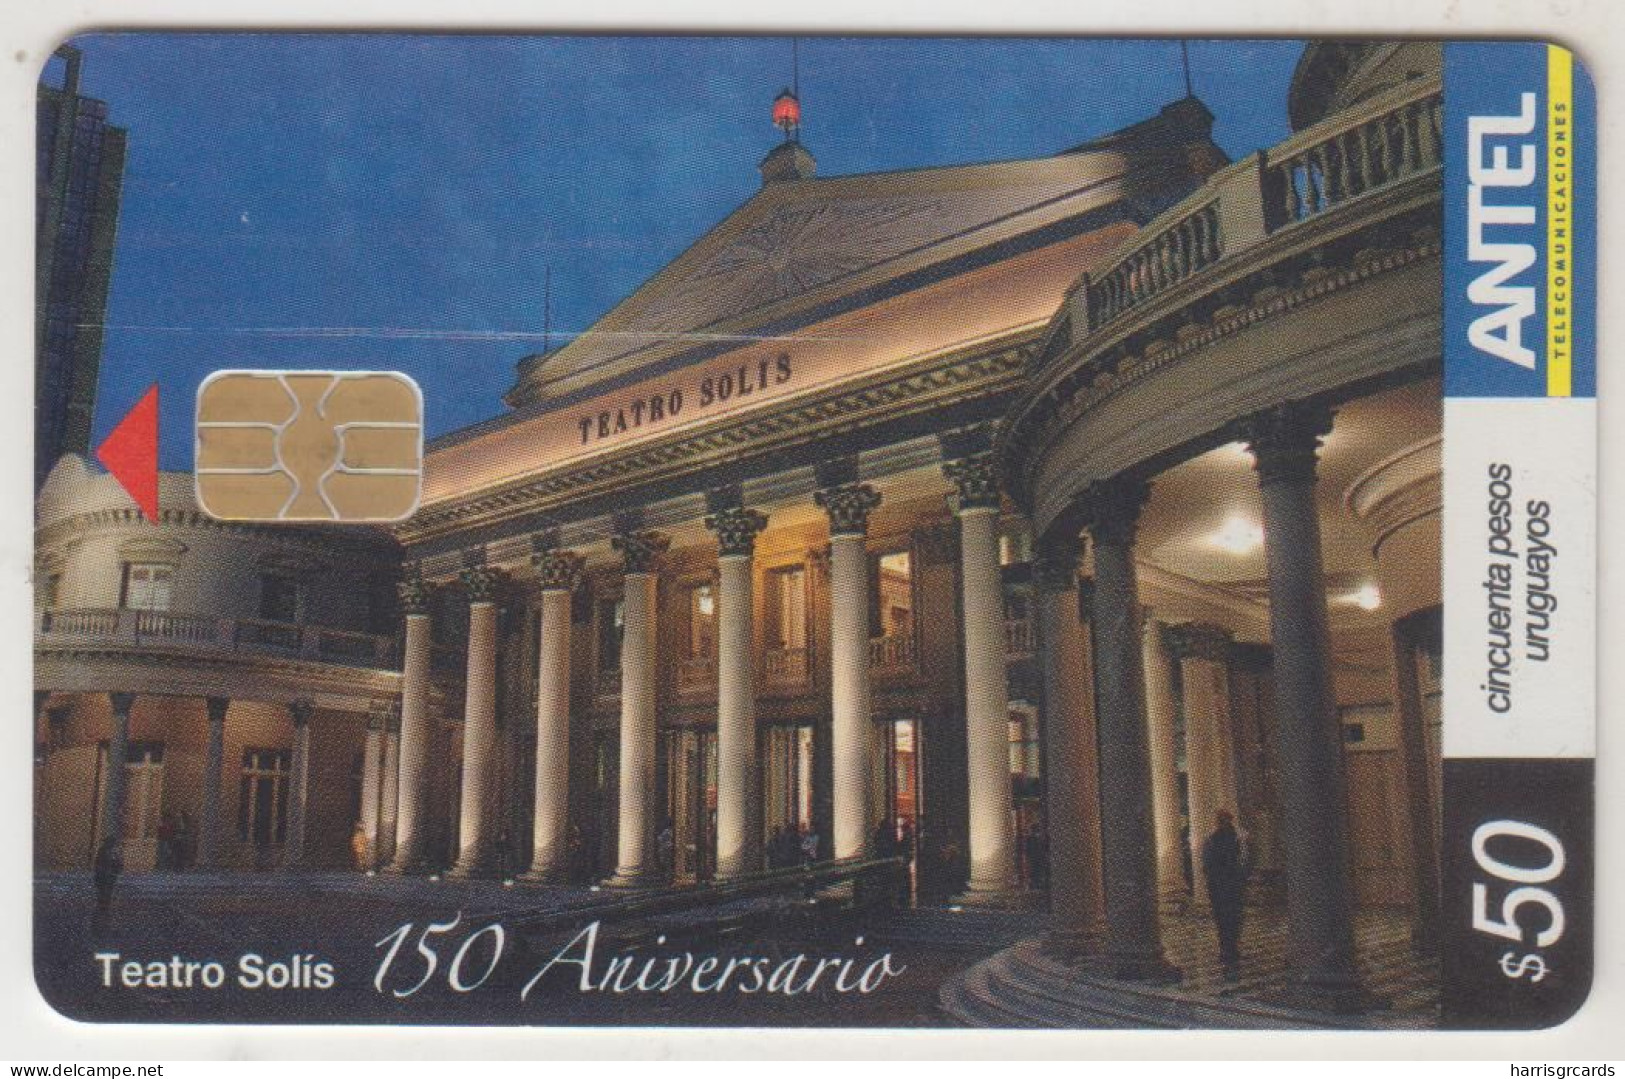 URUGUAY - Teatro Solis 150 Aniversario, TC 448a, Chip: AX03, 50 $ , Tirage 100.000, Used - Uruguay